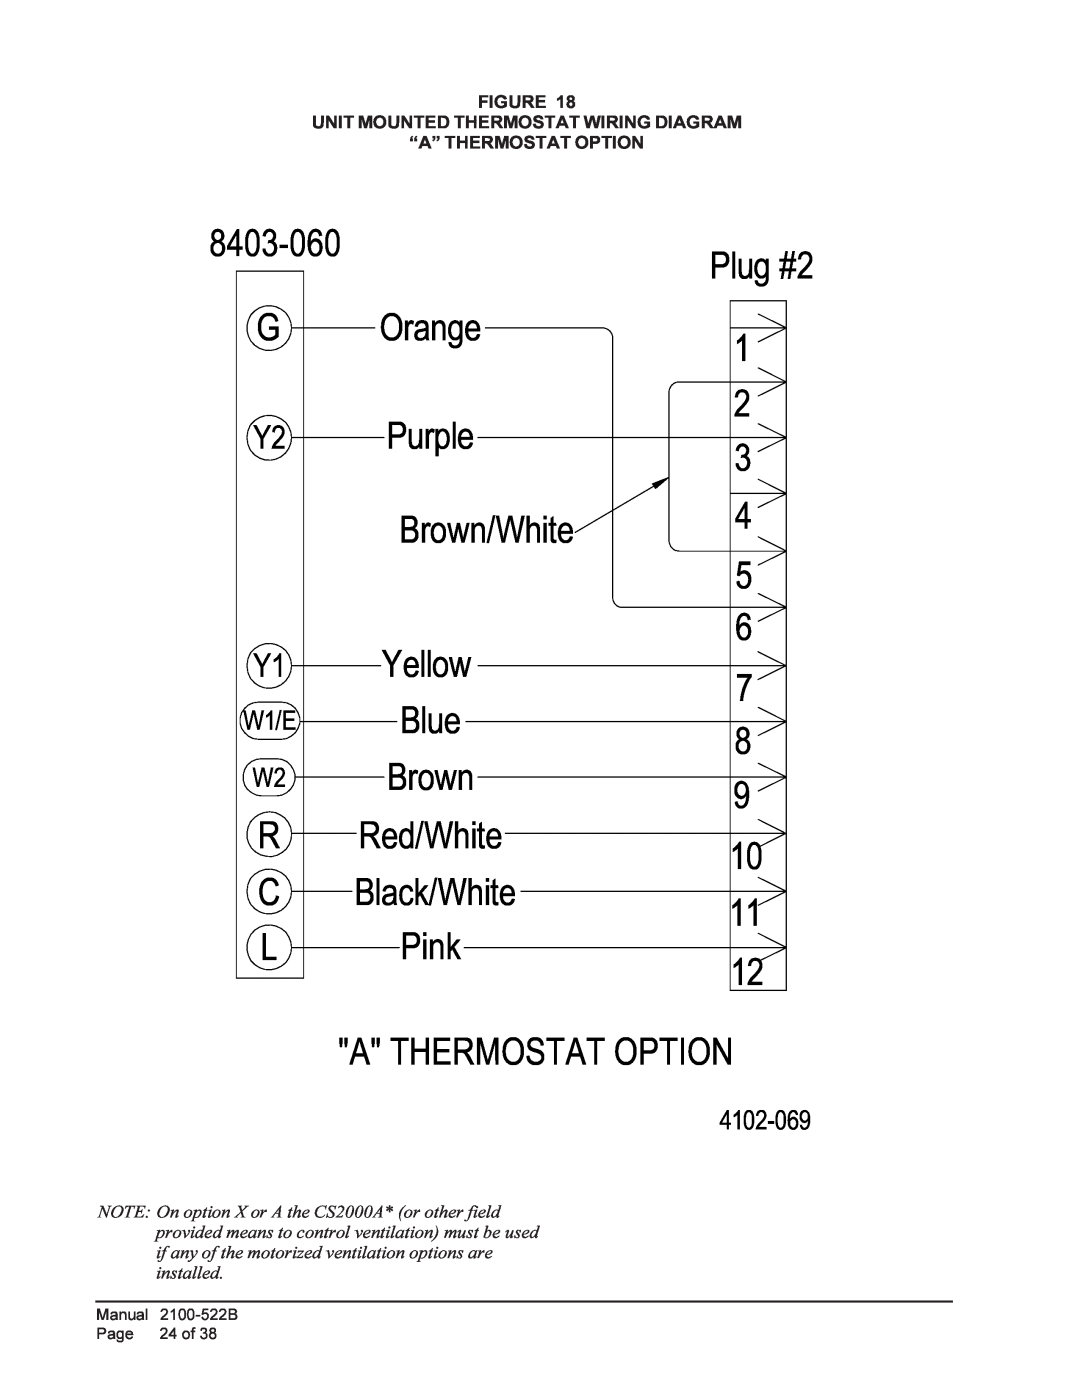 Bard Q30A1 GOrange Y2 Purple Brown/White Y1 Yellow, W2 Brown RRed/White CBlack/White L Pink, A Thermostat Option, 4102-069 